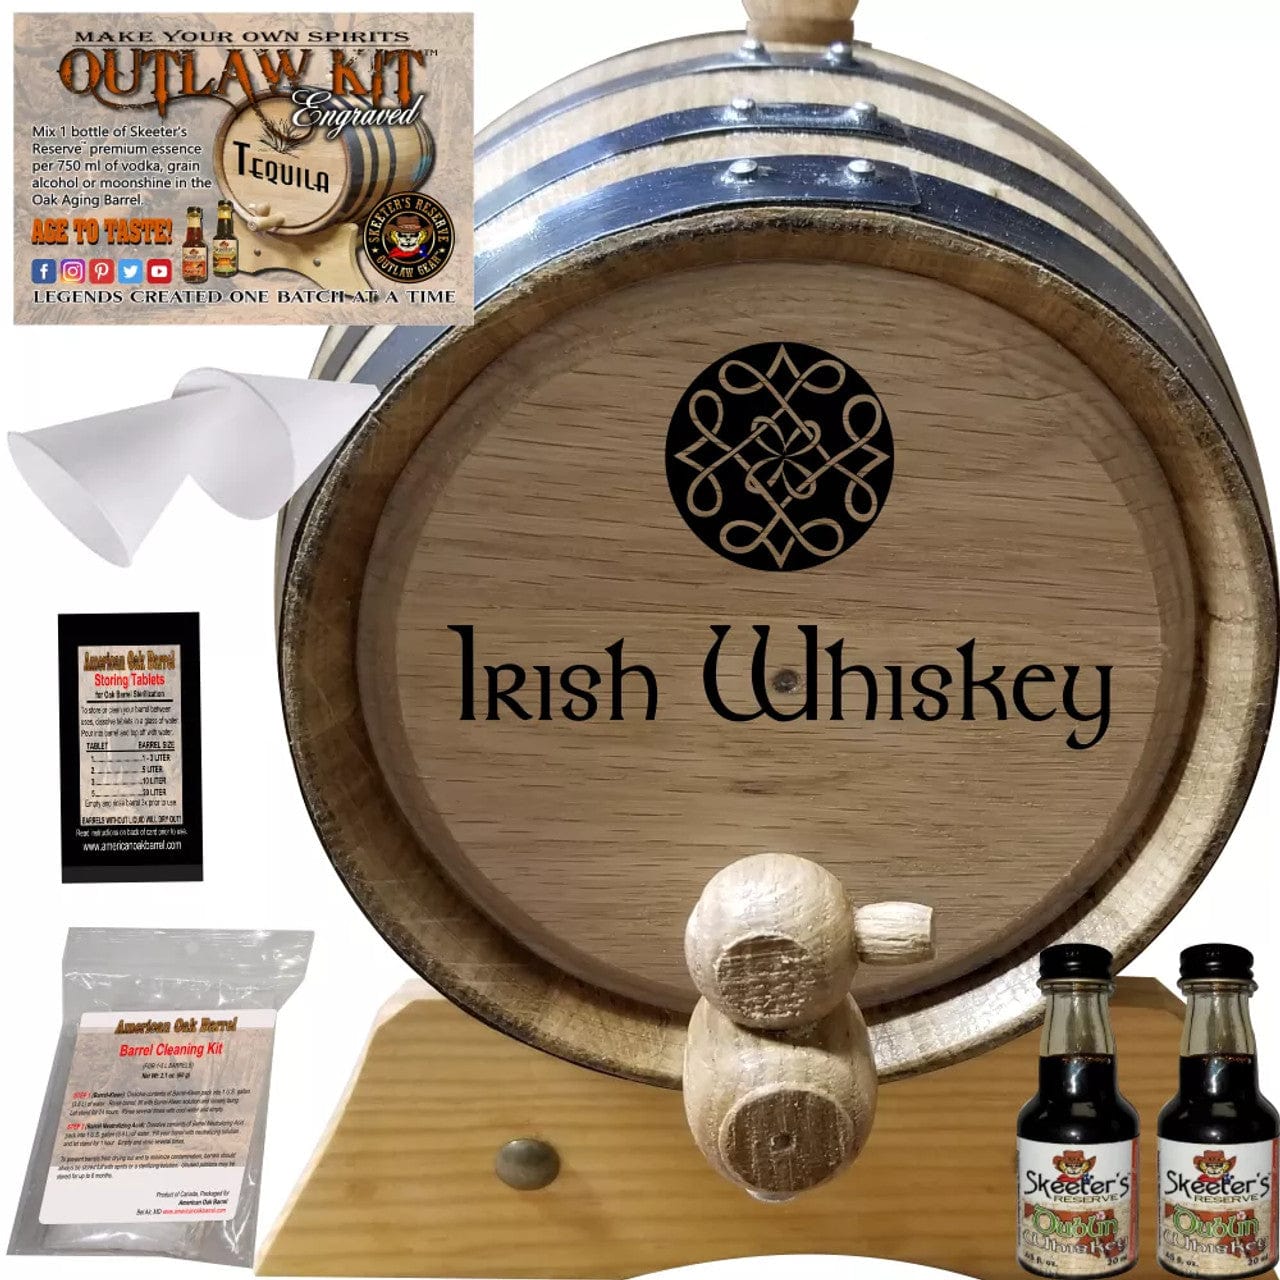 American Oak Barrel Outlaw Kits 1 Liter (.26 gallon) / Dark Jamaican Rum American Oak Barrel Engraved Outlaw Kit™ (008) Irish Whiskey - Create Your Own Spirits